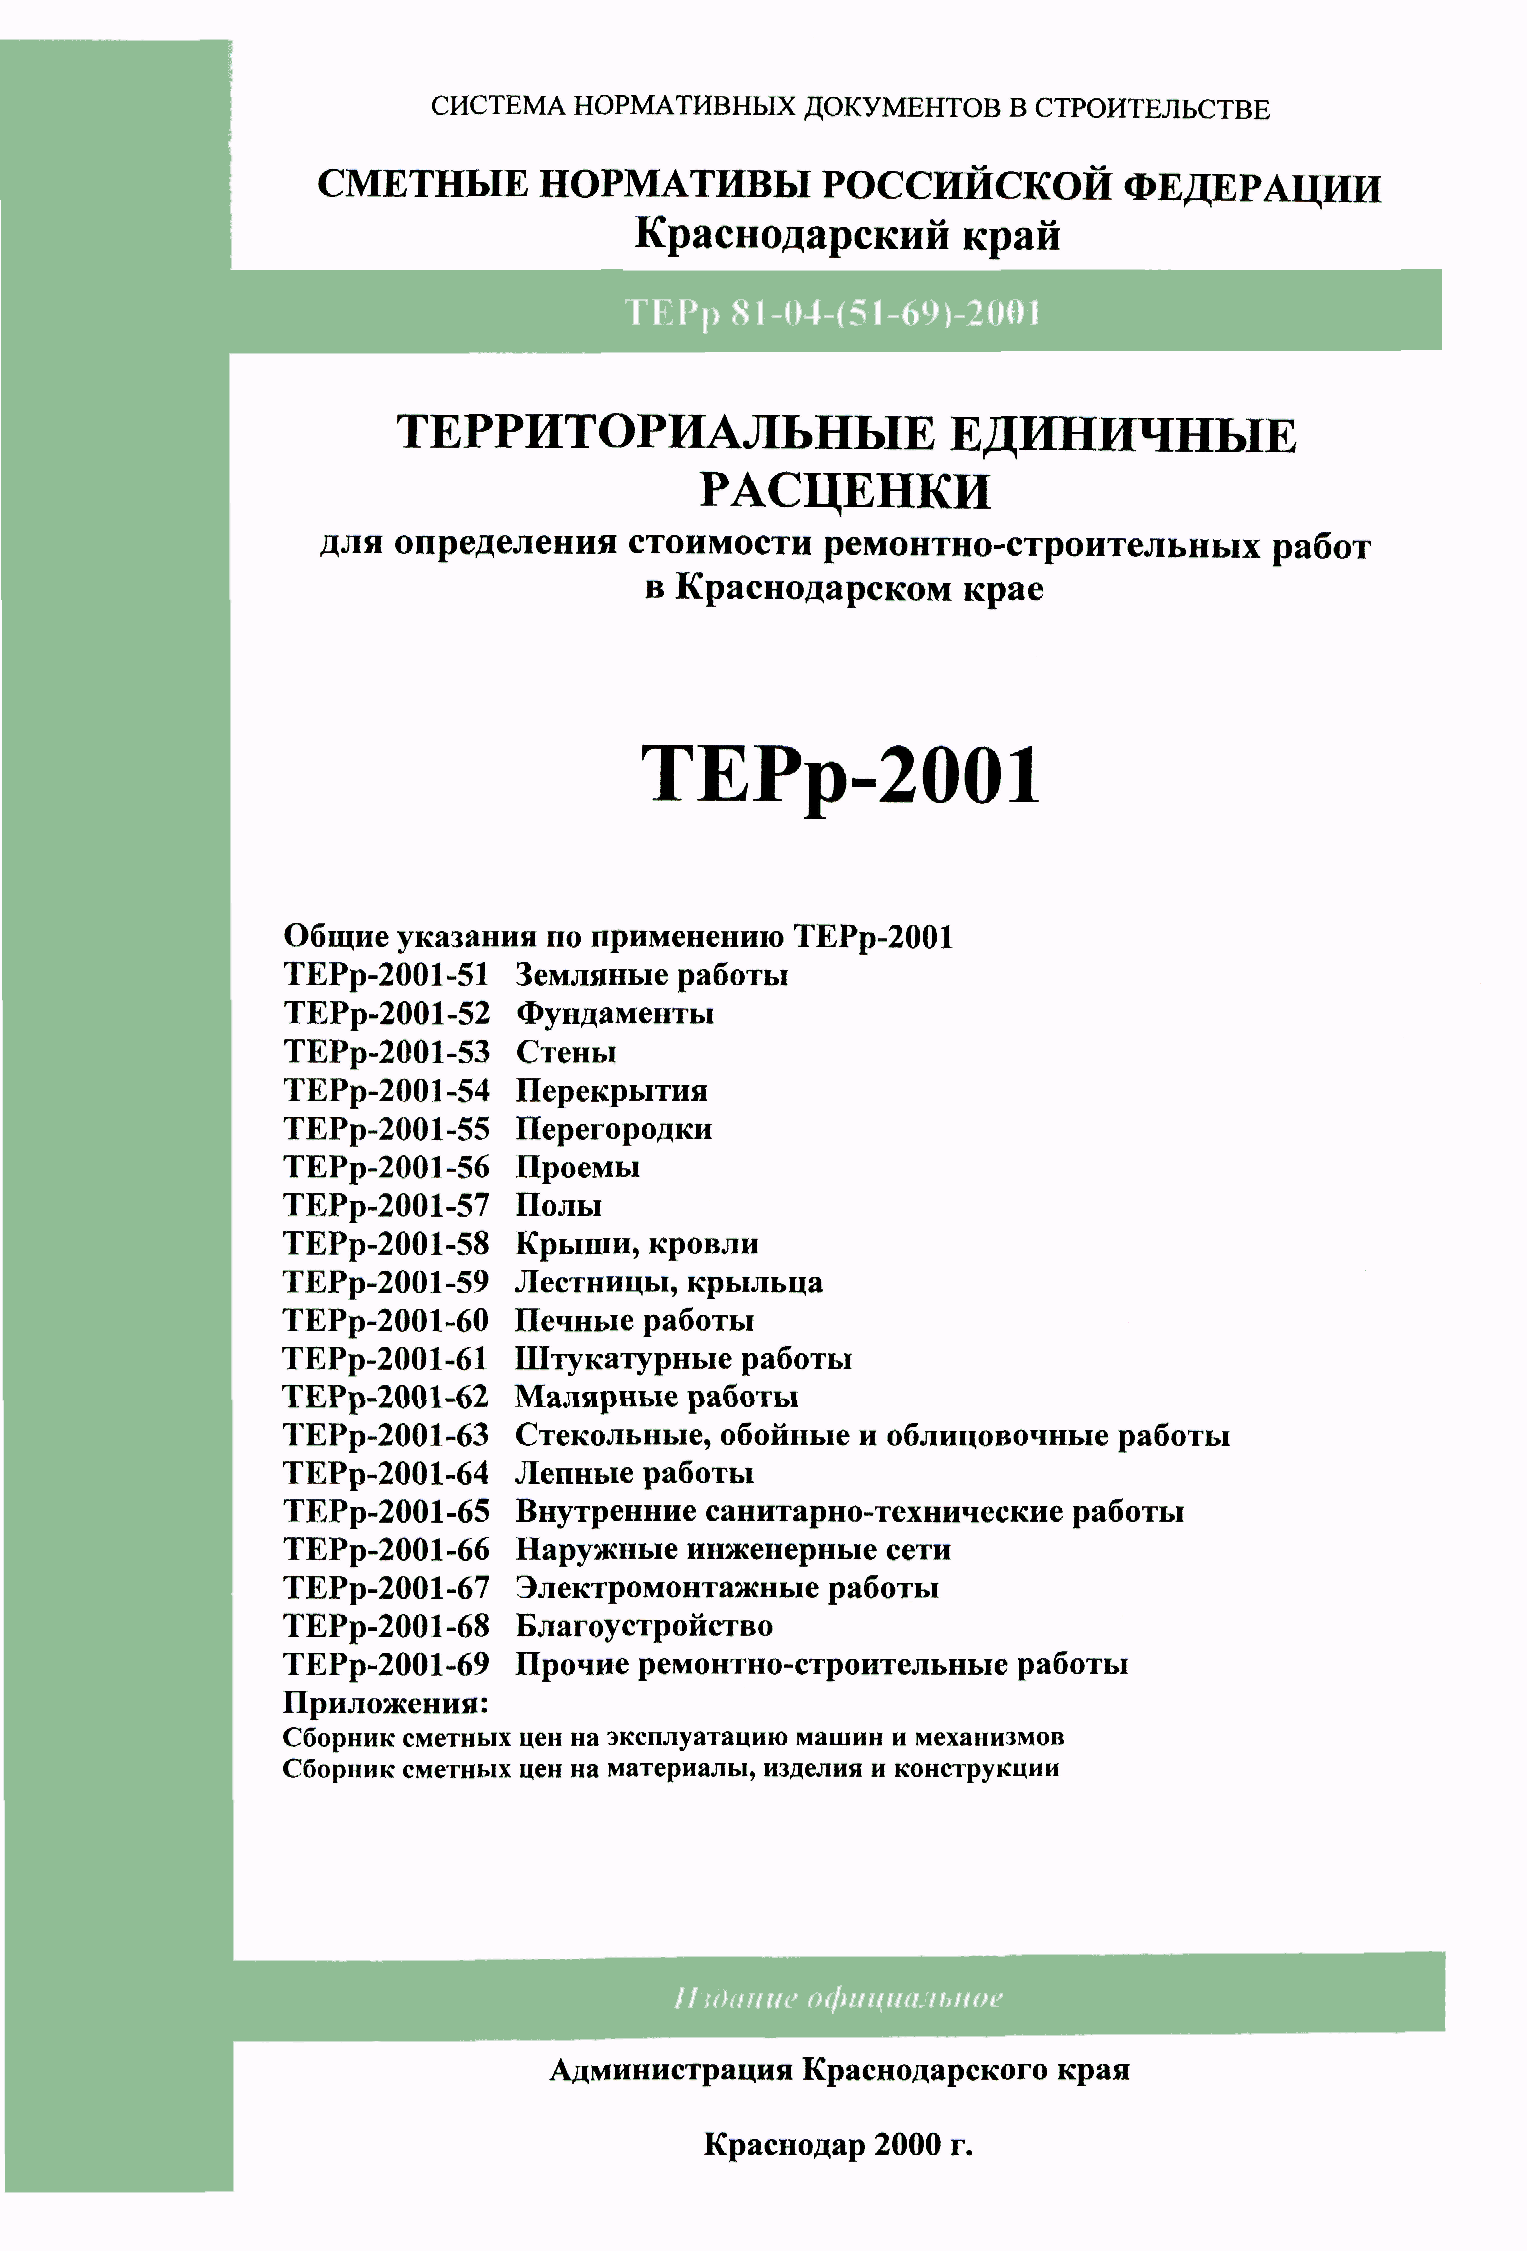 ТЕРр Краснодарский край 2001-57